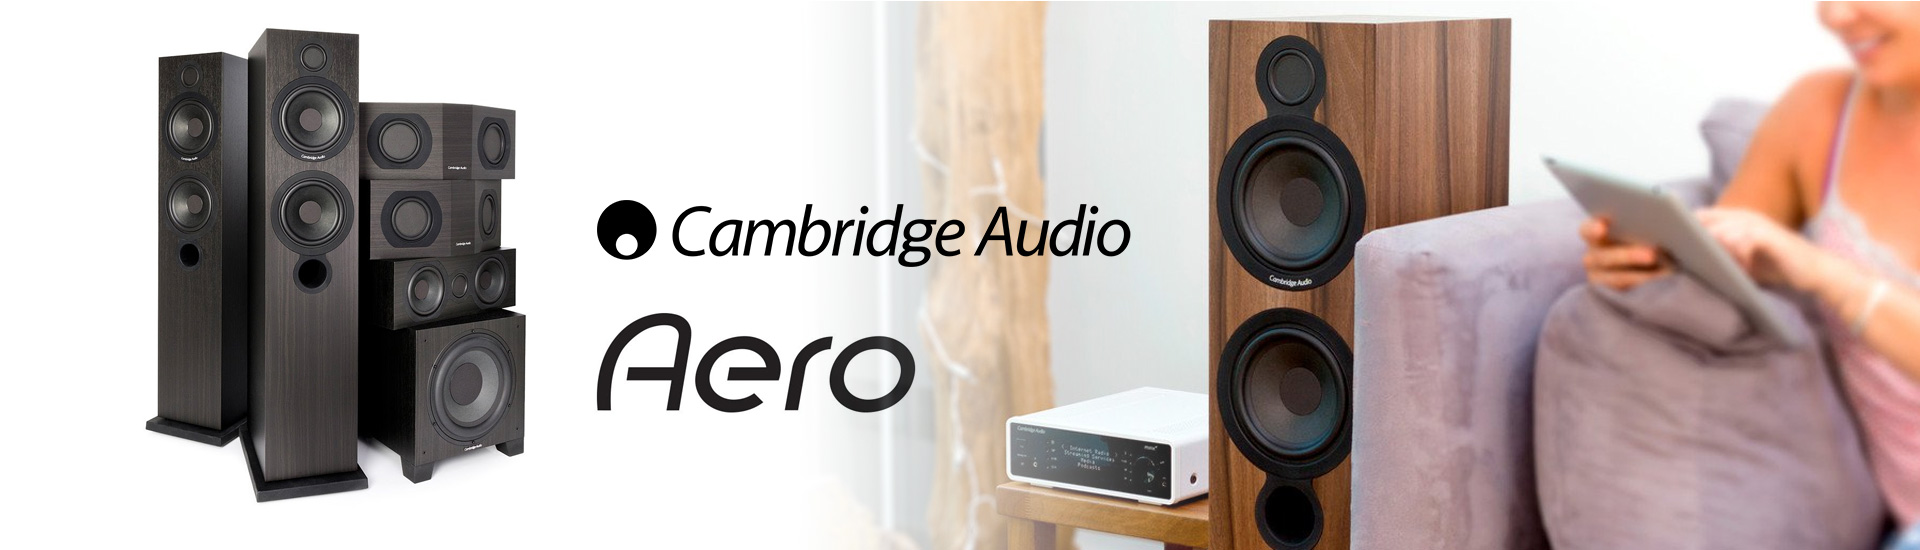 Cambridge Audio Aero